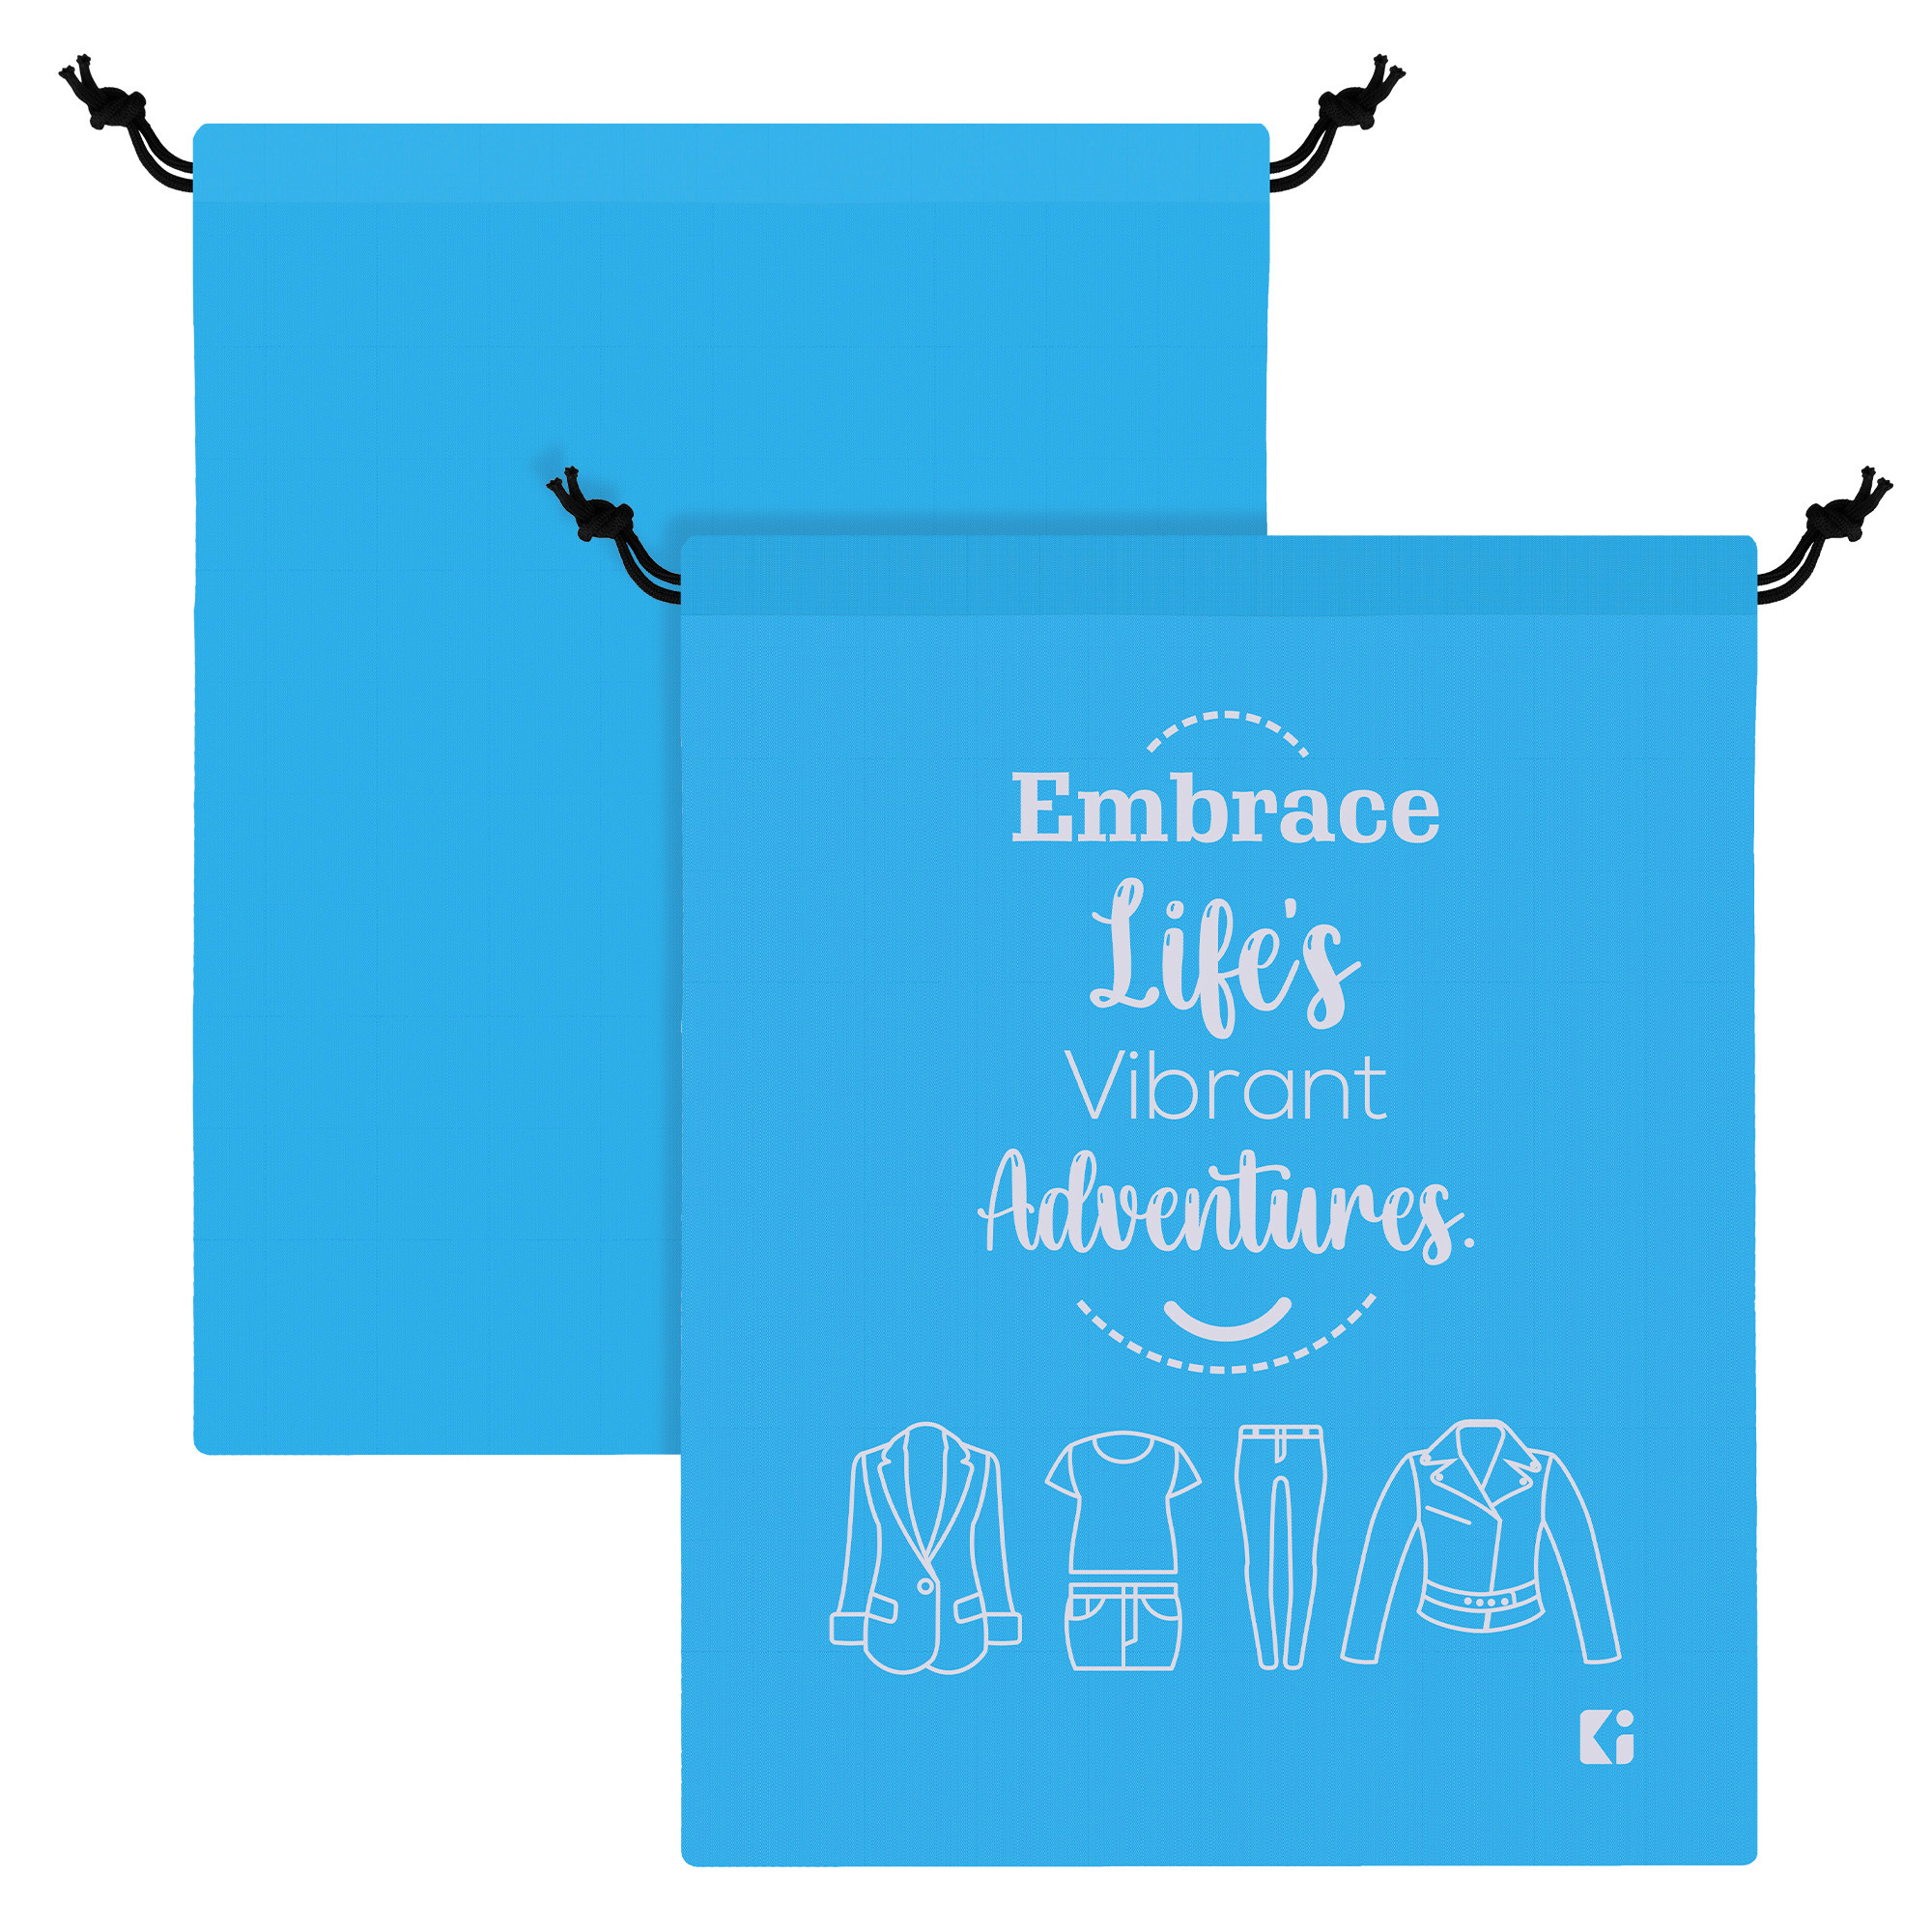 Kuber Industries Cloth Storage Bag | Storage Organizer | Travel Cloth Carrying Bag | Garments Cover for Laundry | Travel Storage Organizer for Clothing | Medium | Yellow & Sky Blue